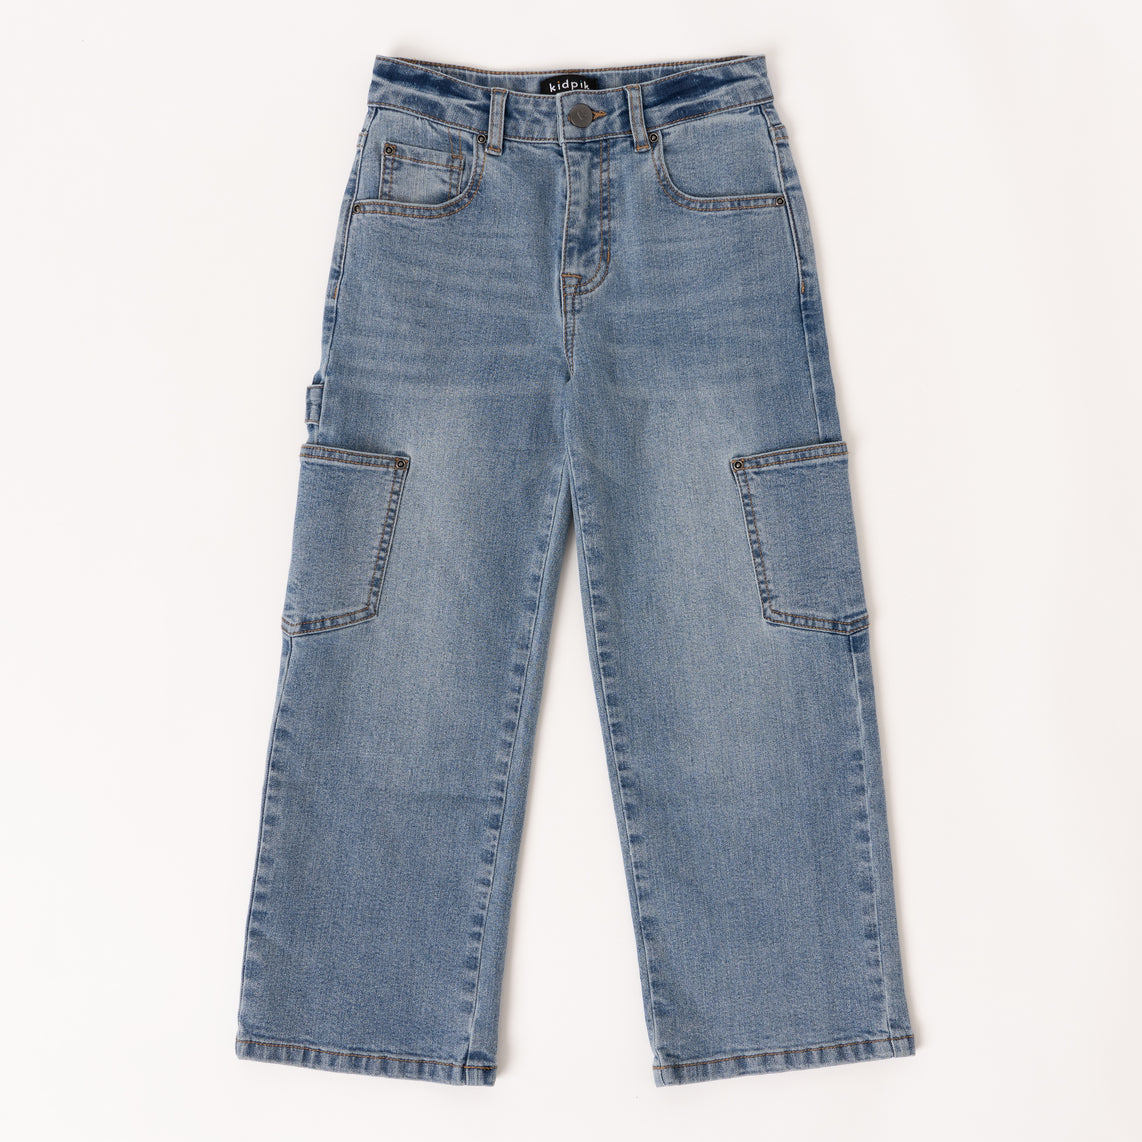 Sweet Look Classic Rhinestone Premium Women's Stretch Skinny Fit Blue Denim Jeans Pants, Size: 7